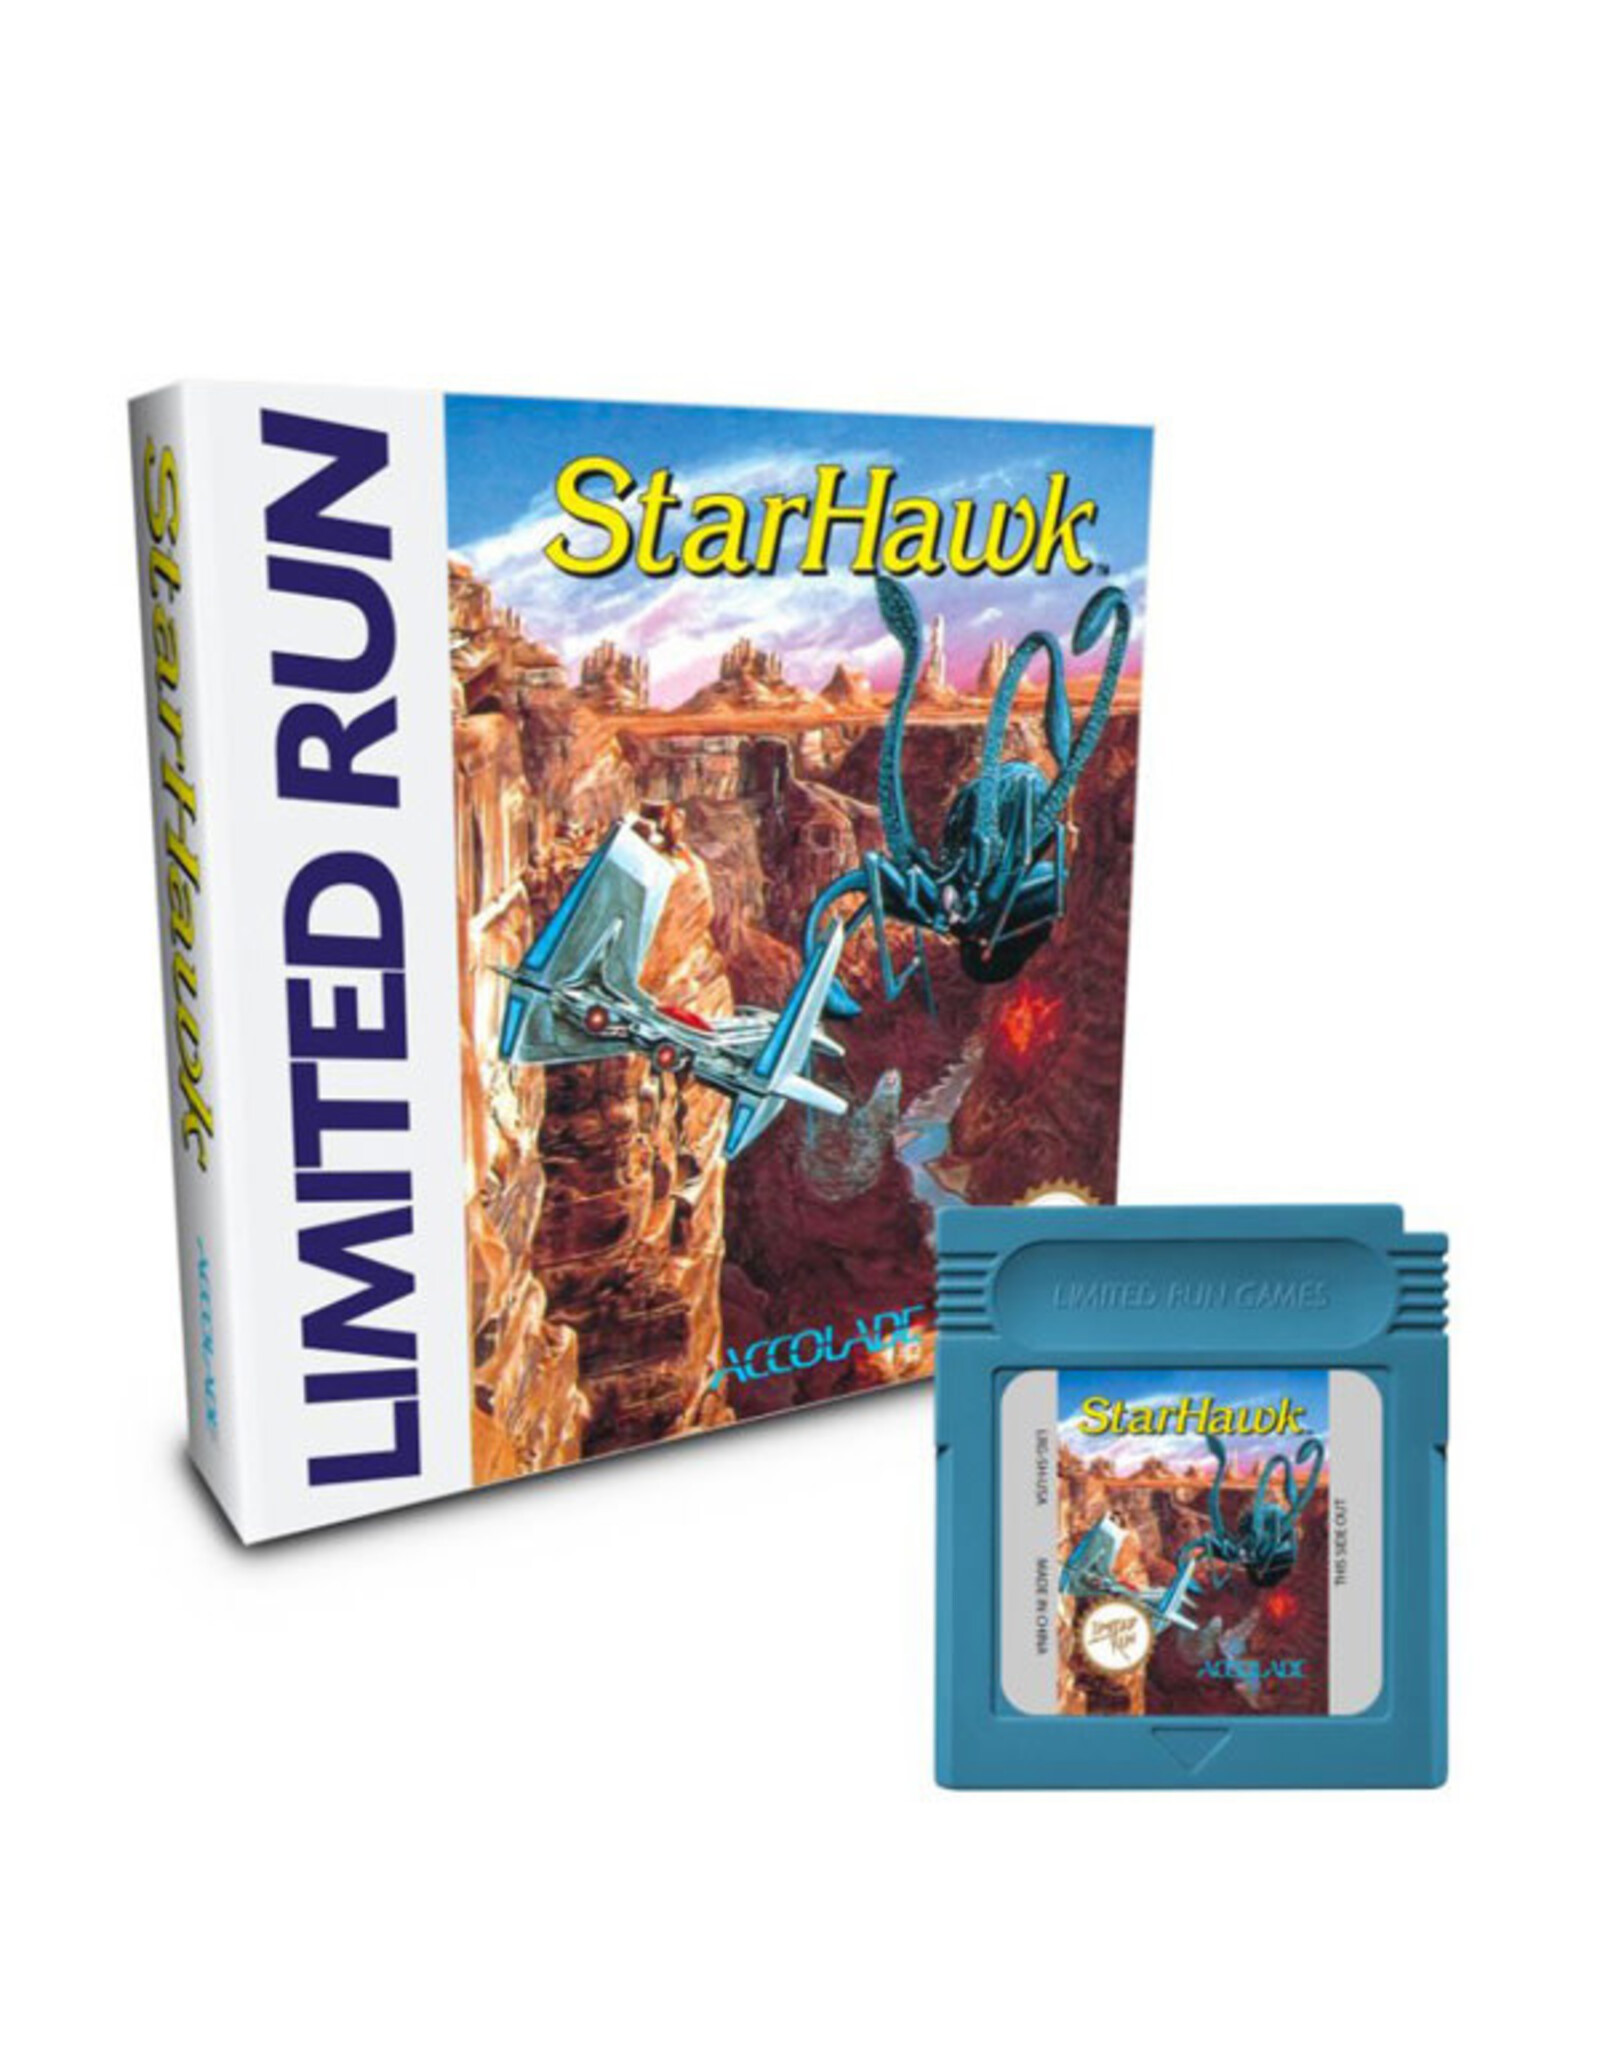 Game Boy Starhawk (LRG, Brand New)